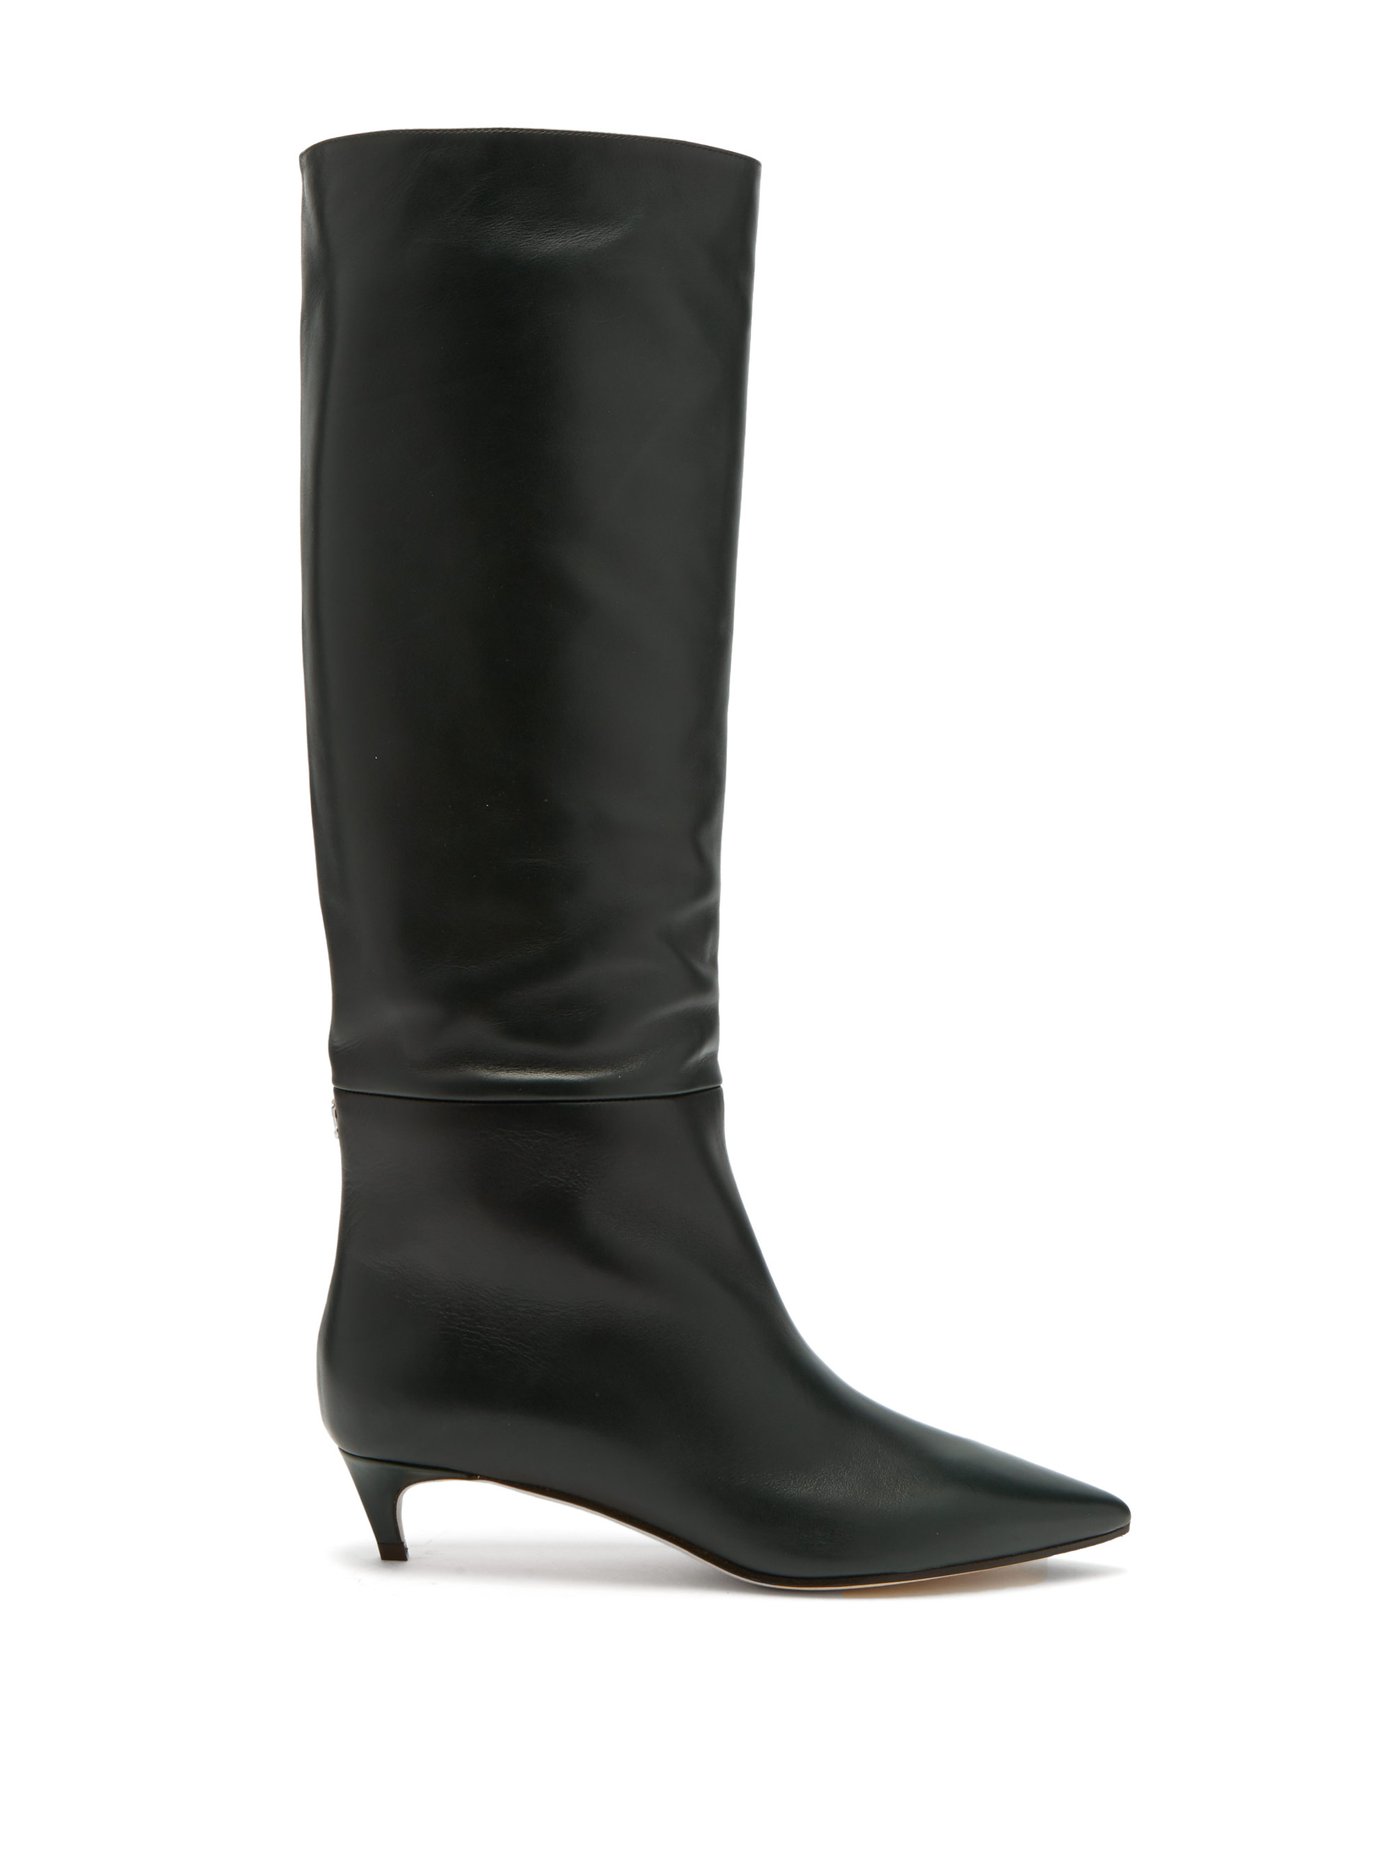 black leather knee high boots kitten heel